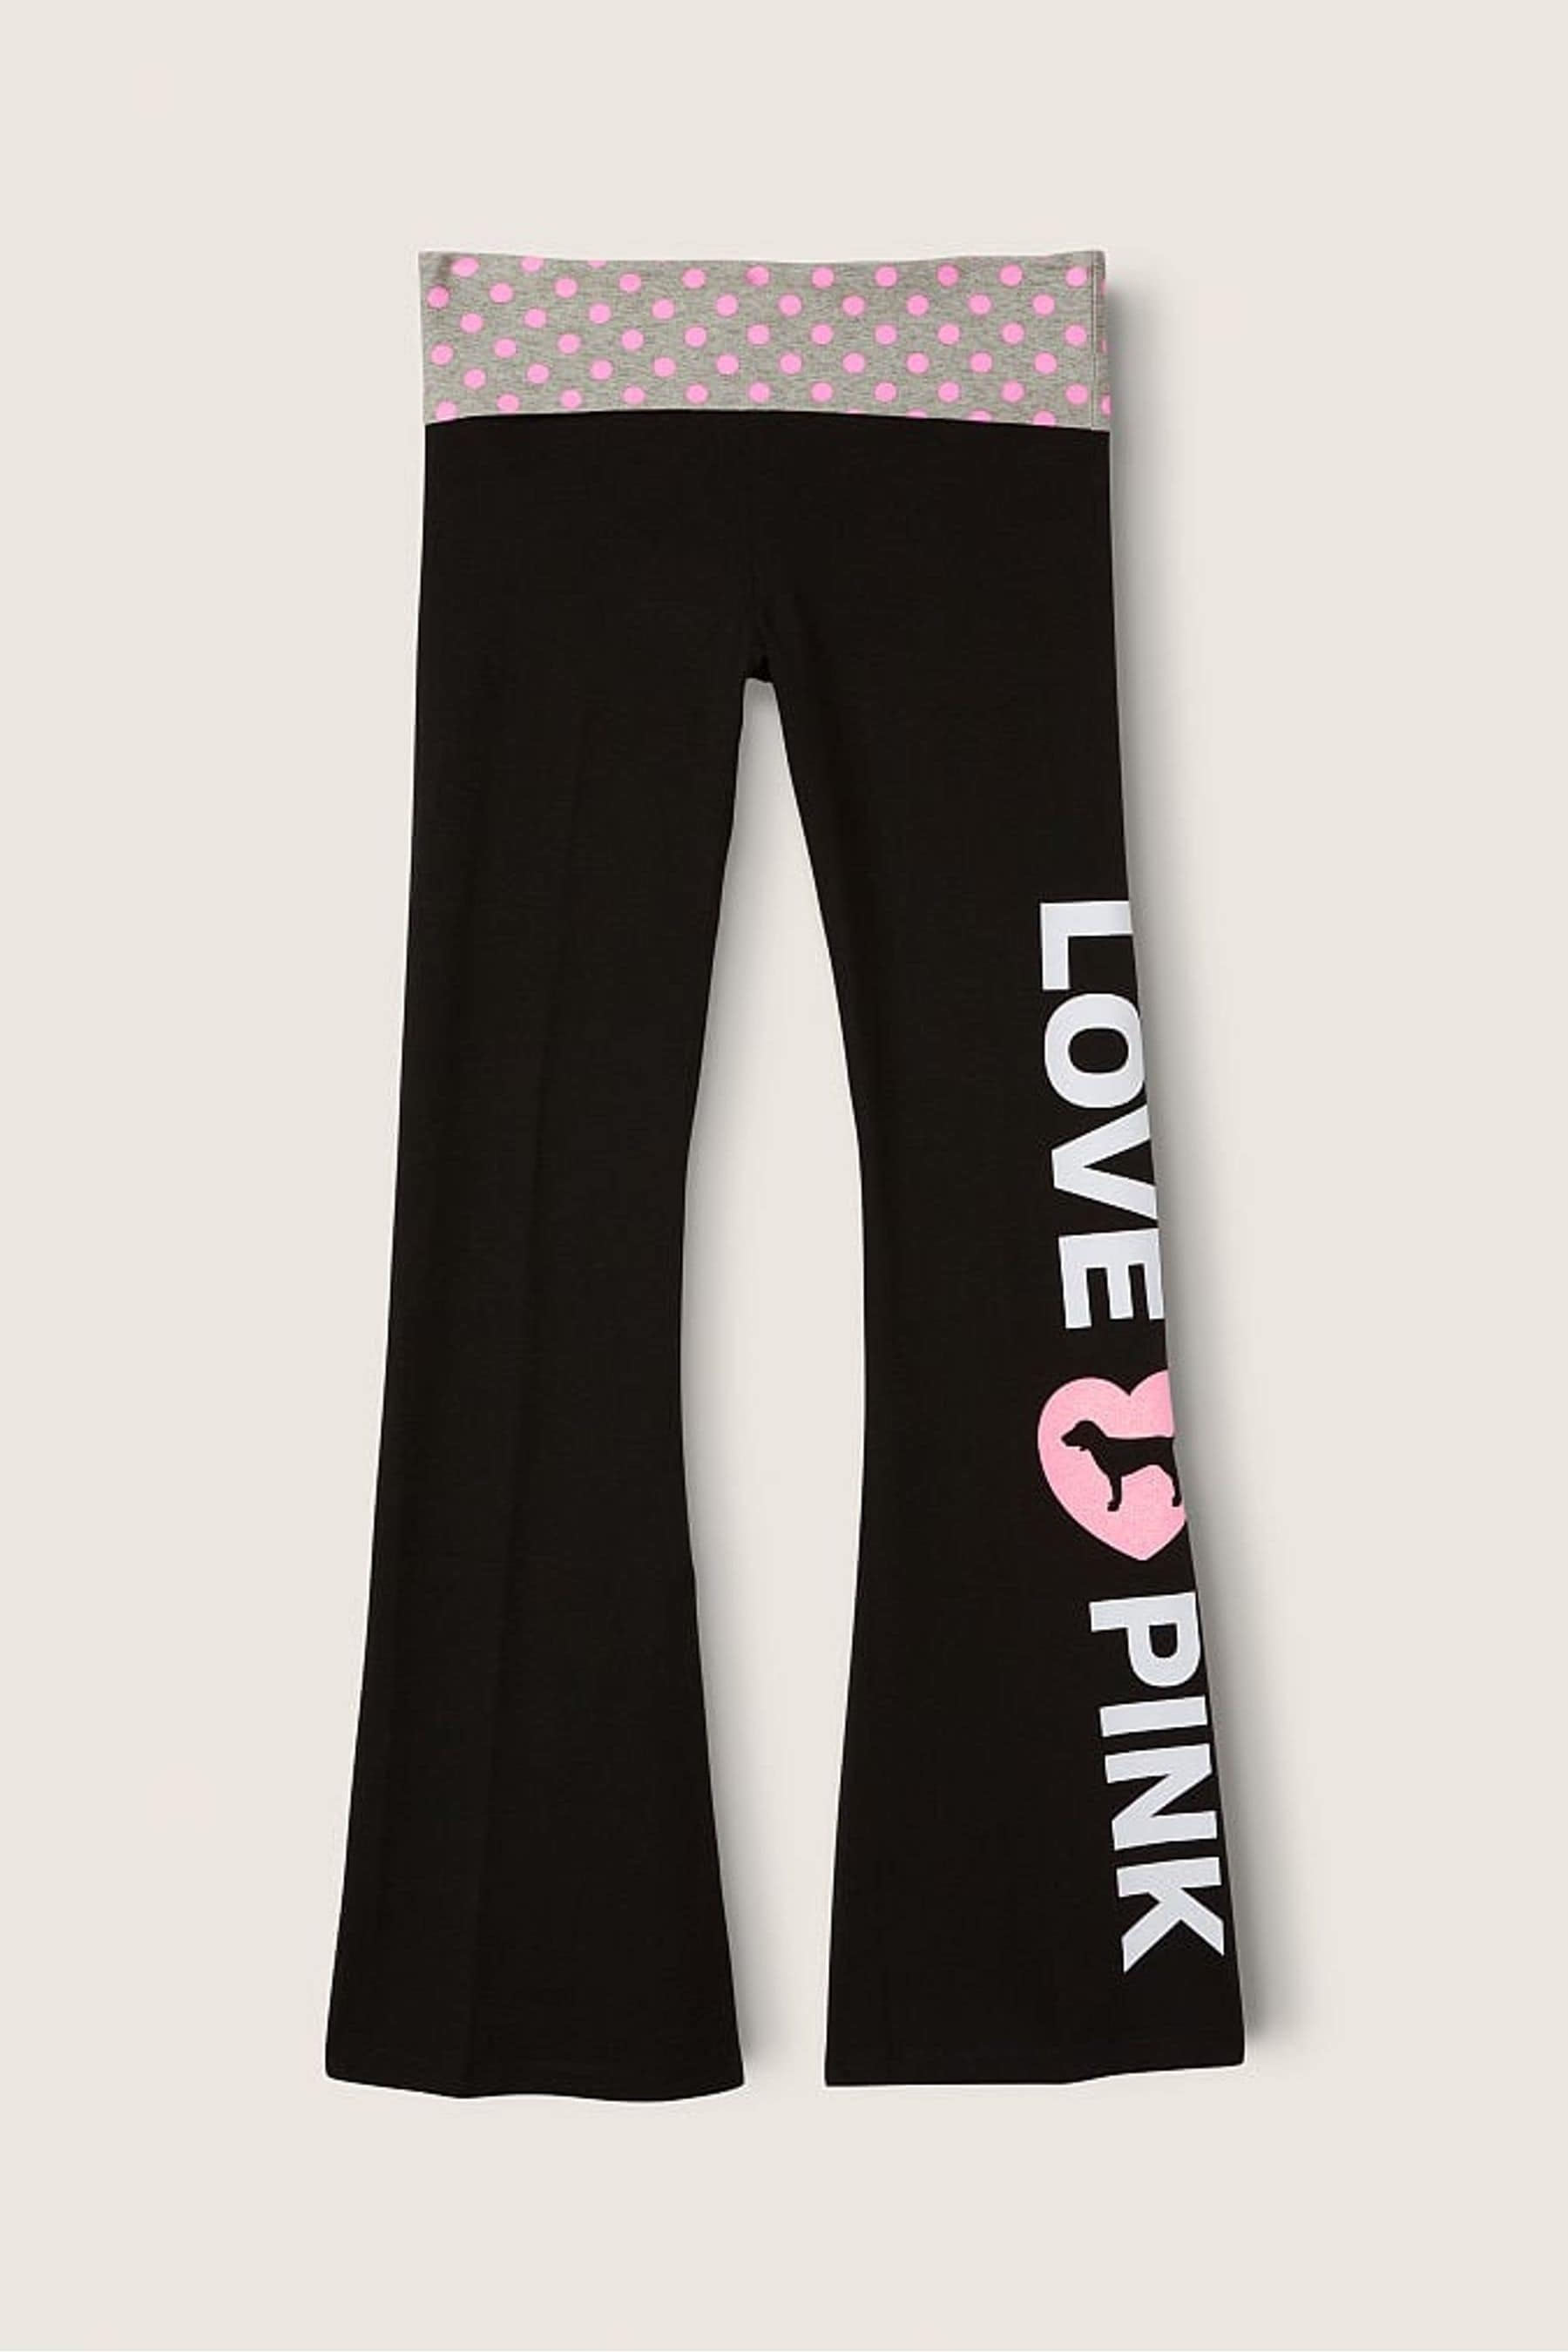 Victorias Secret PINK Logo Waist Band Flat Yoga Legging Pant Dark Gray XS  S NWT  eBay